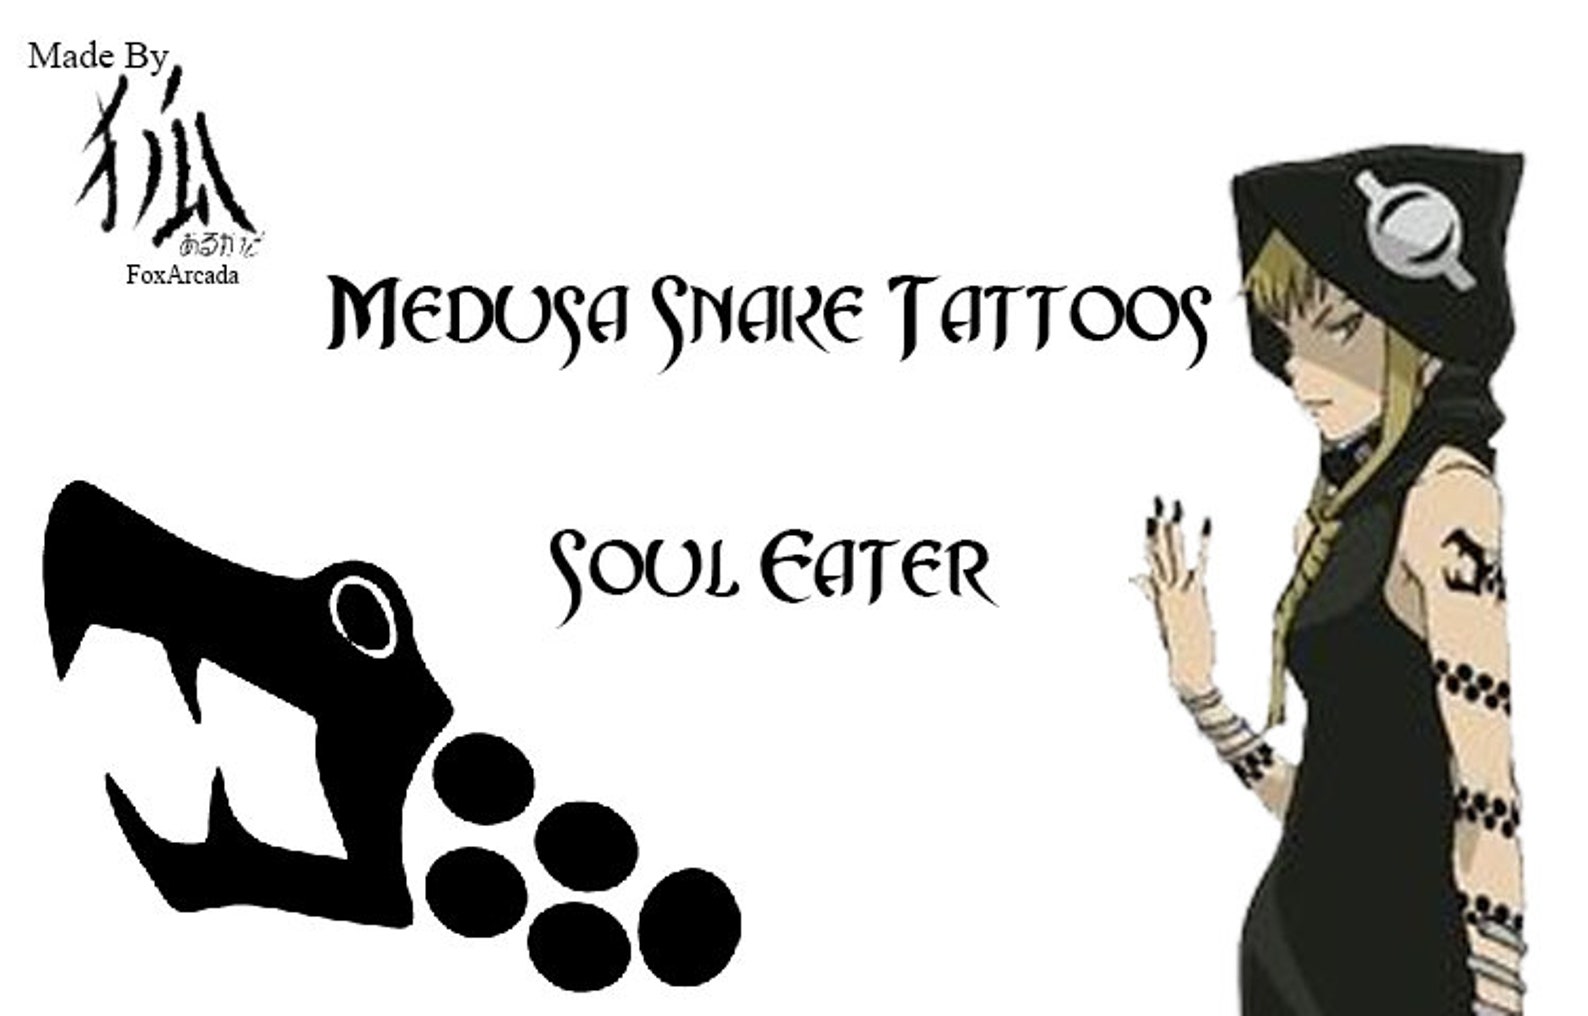 8. "Soul Eater Medusa Tattoo" - wide 7